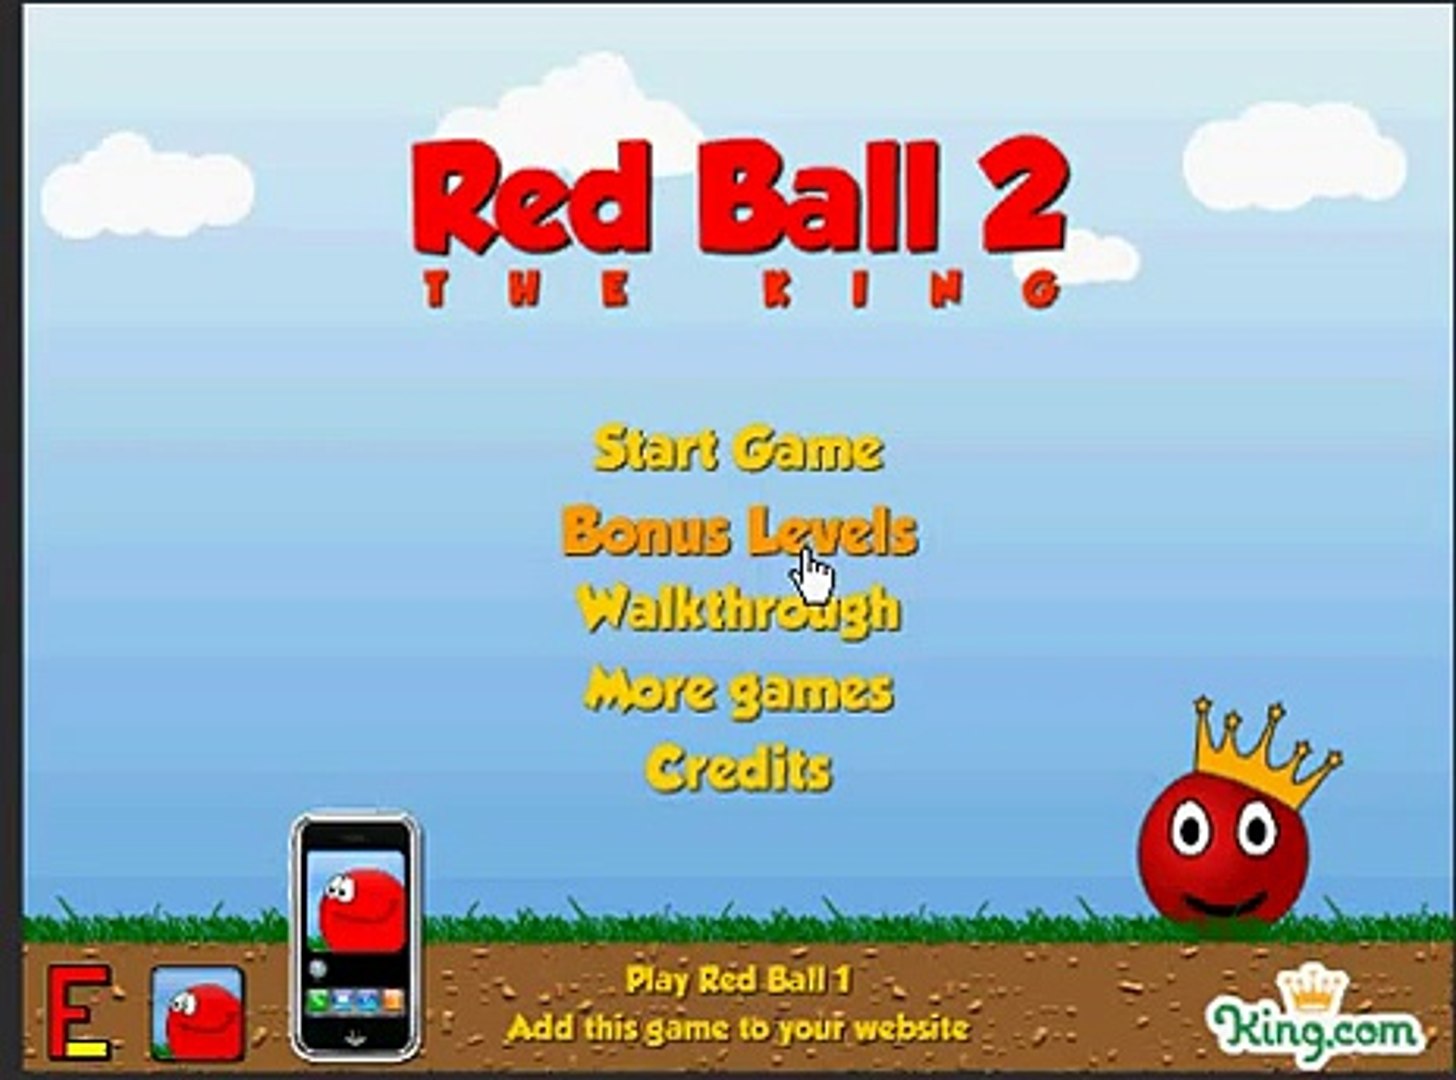 Håndbog Solrig ting Red ball 2 Walkthrough Bonus levels(21-25) - video Dailymotion